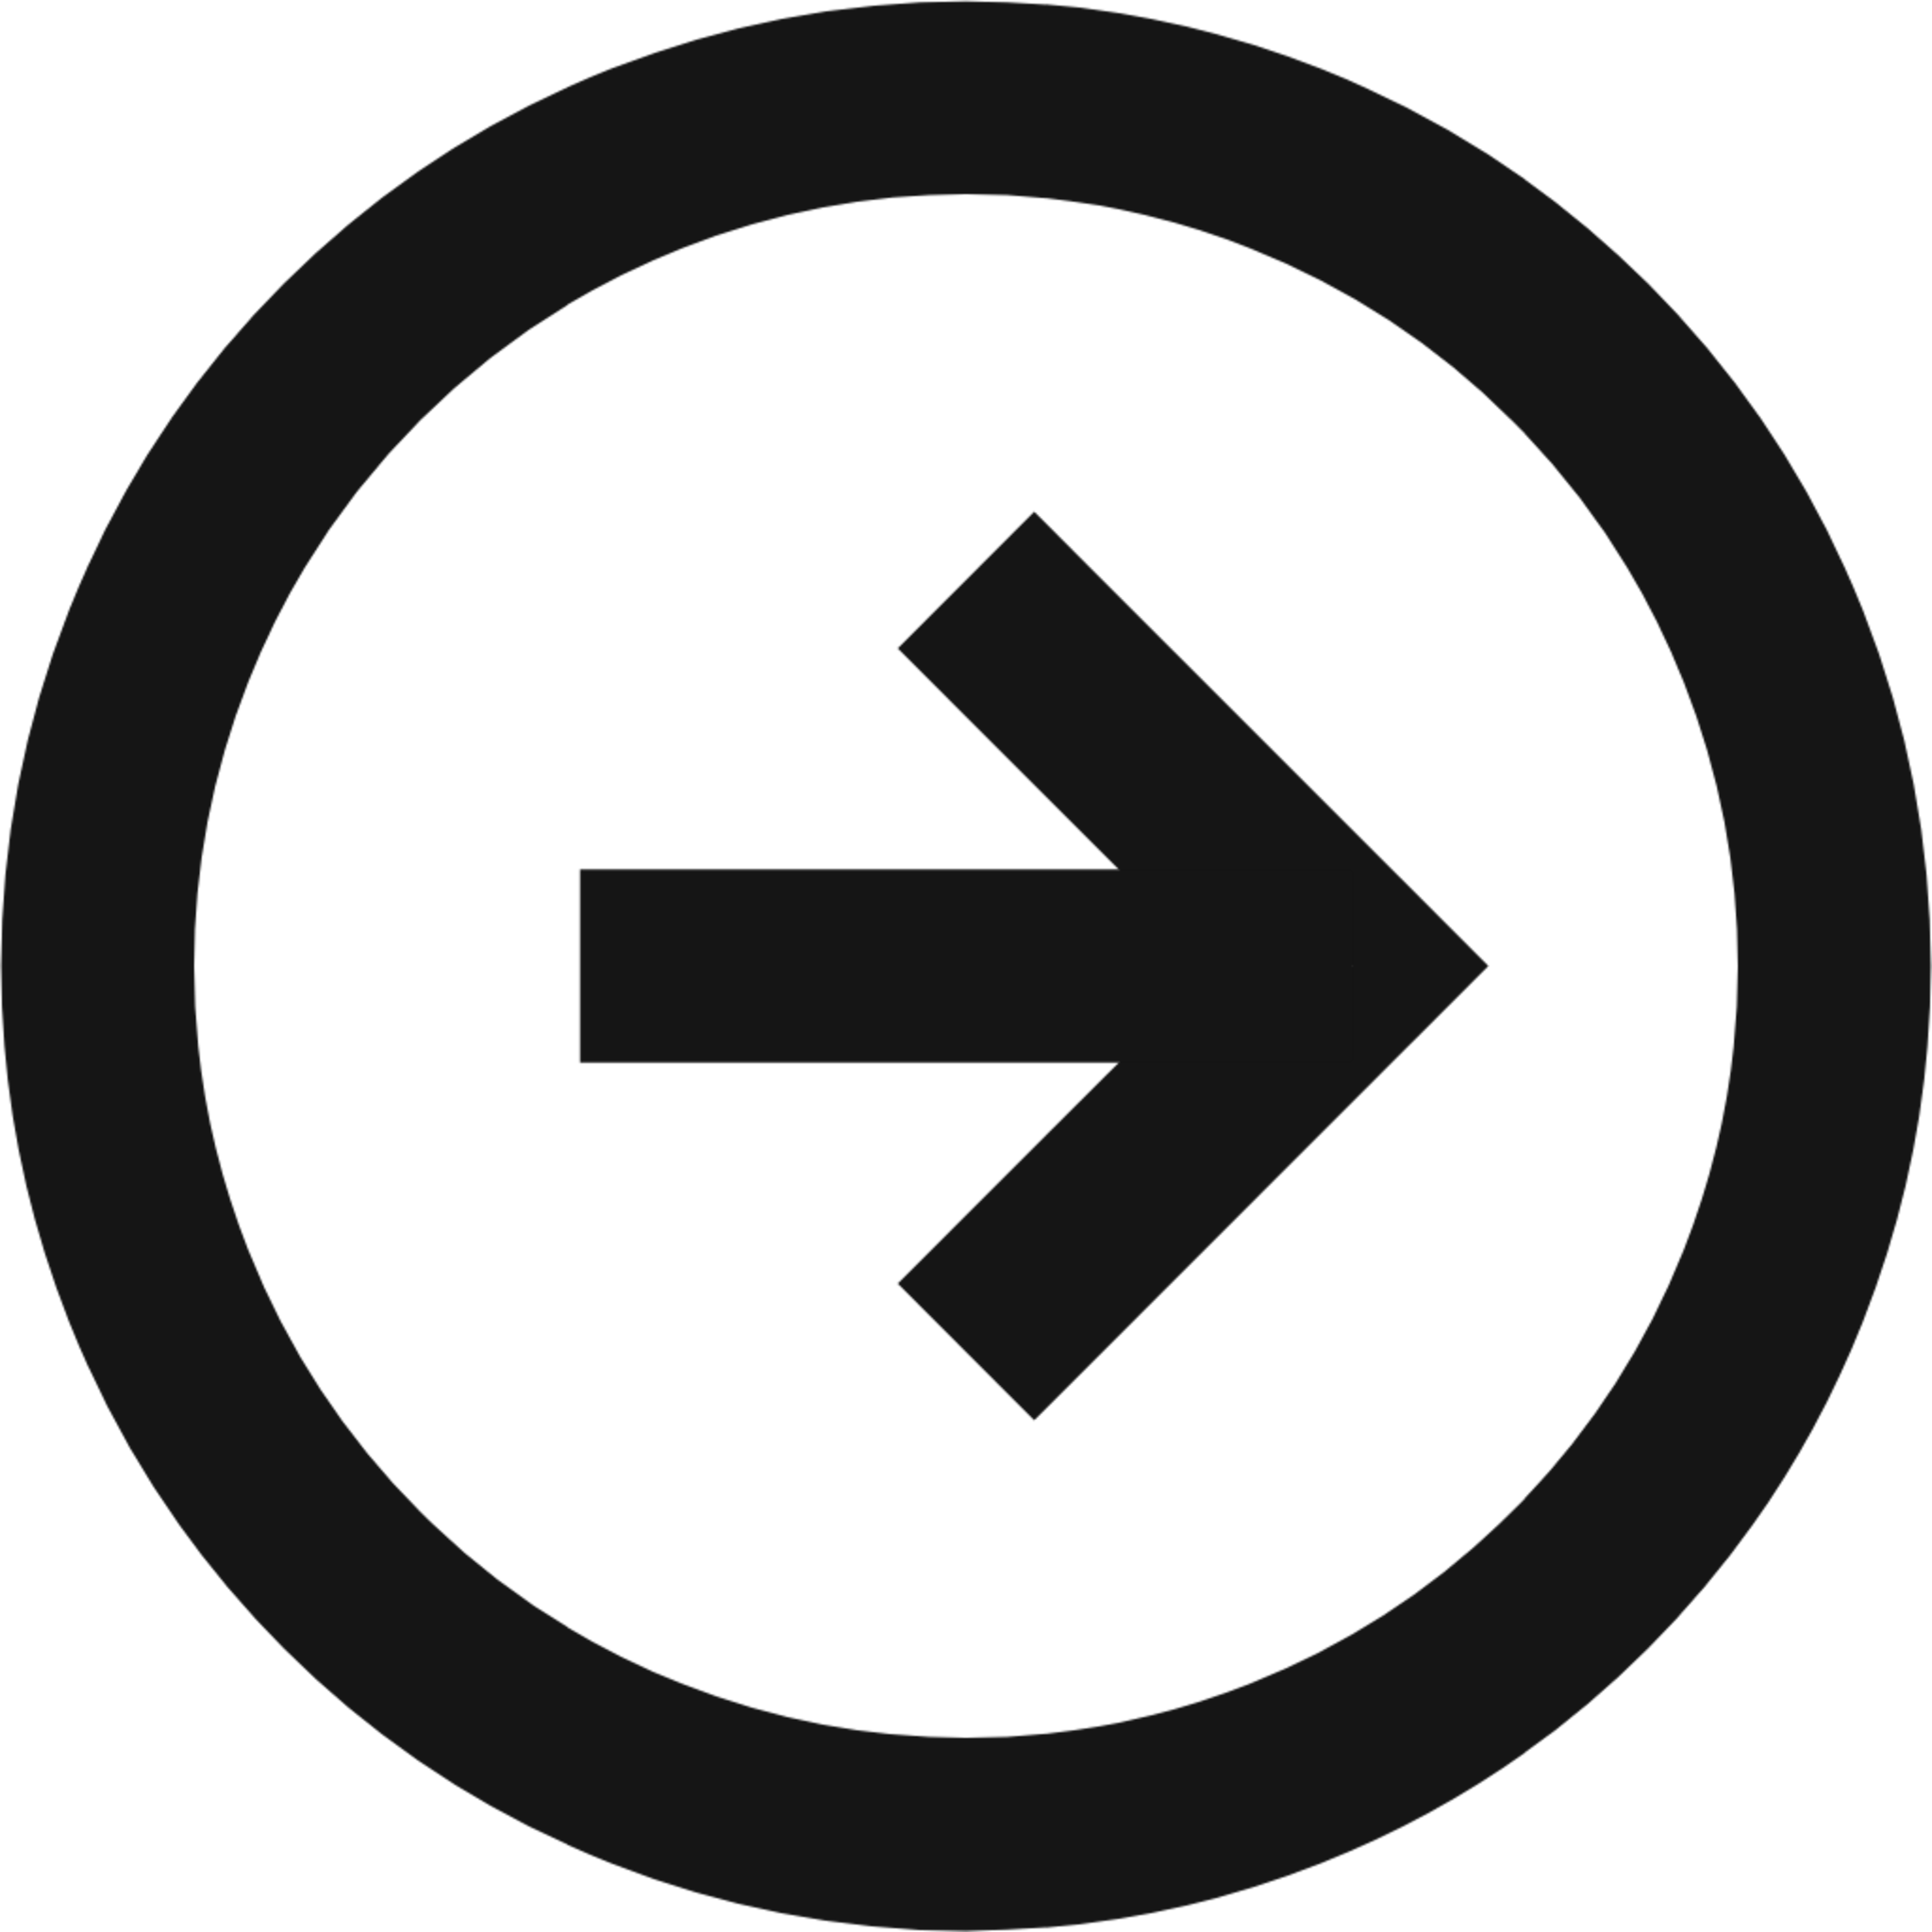 Circle Arrow Right icon